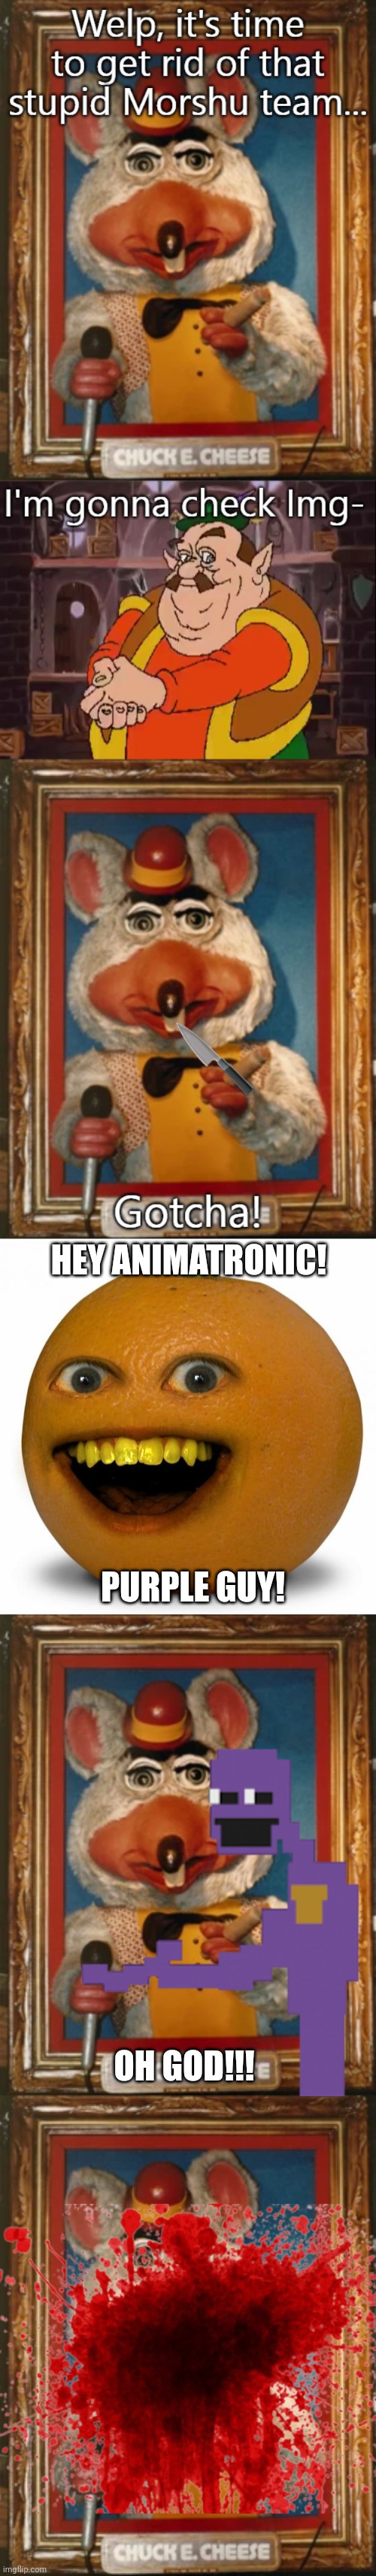 Annoying Orange kills Chuck e Cheese | HEY ANIMATRONIC! PURPLE GUY! OH GOD!!! | image tagged in annoying orange,portrait cec | made w/ Imgflip meme maker